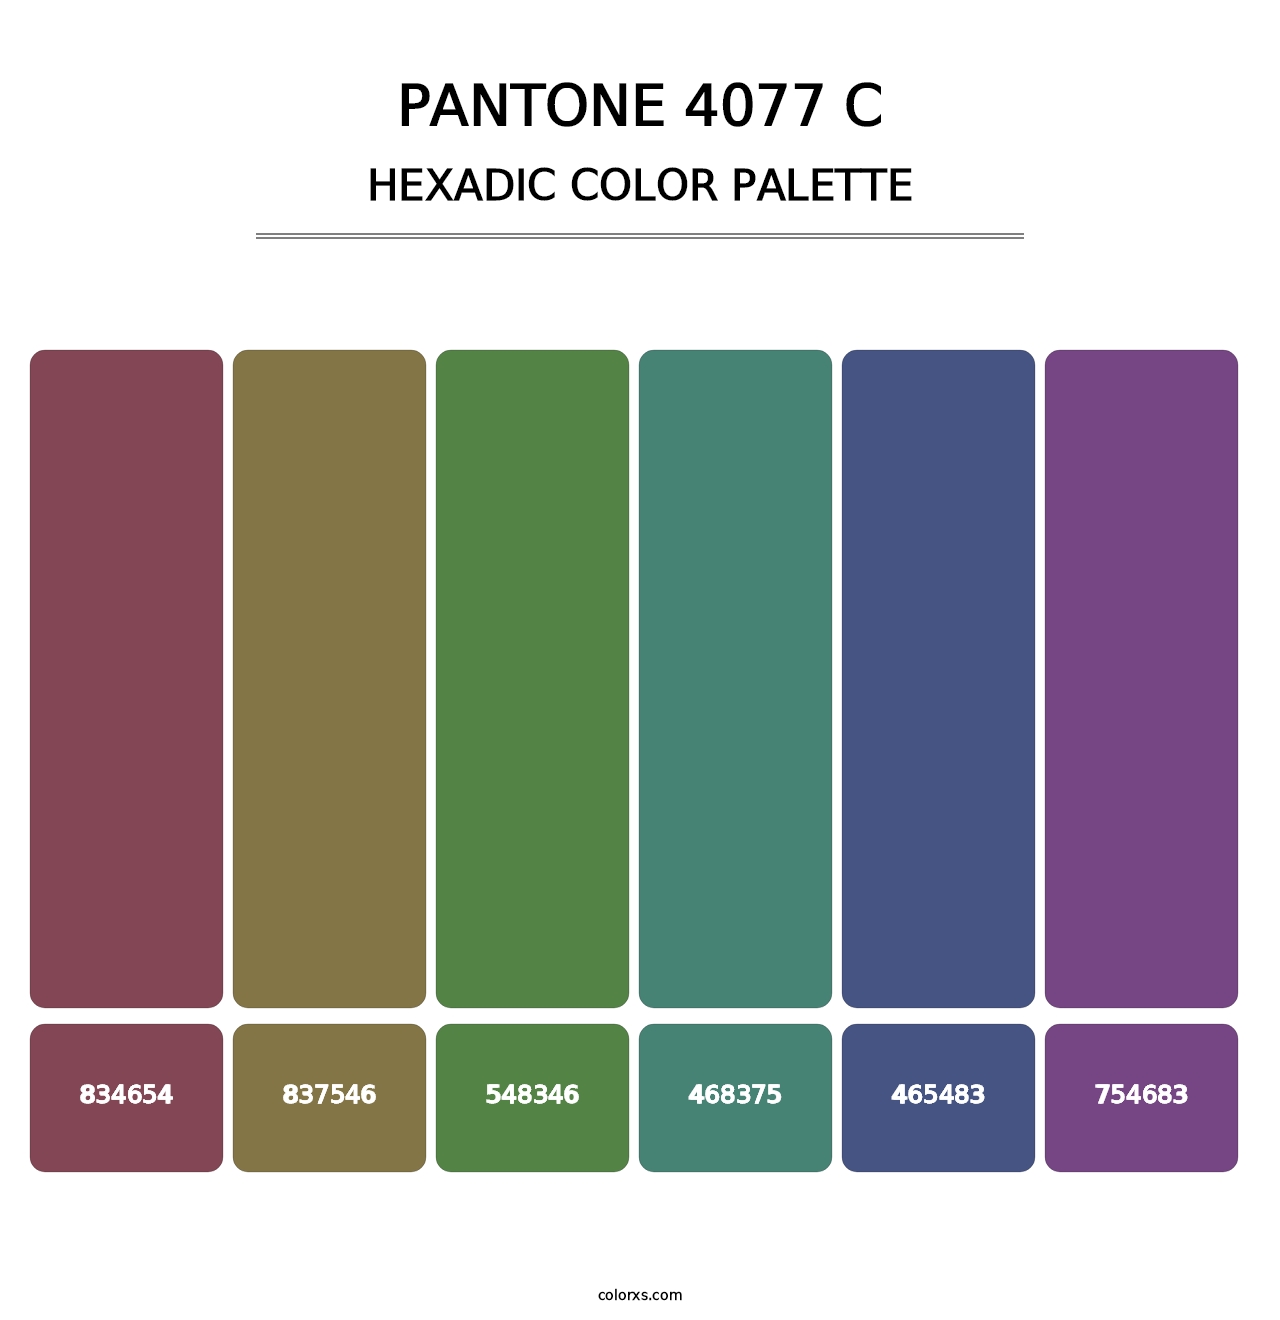 PANTONE 4077 C - Hexadic Color Palette